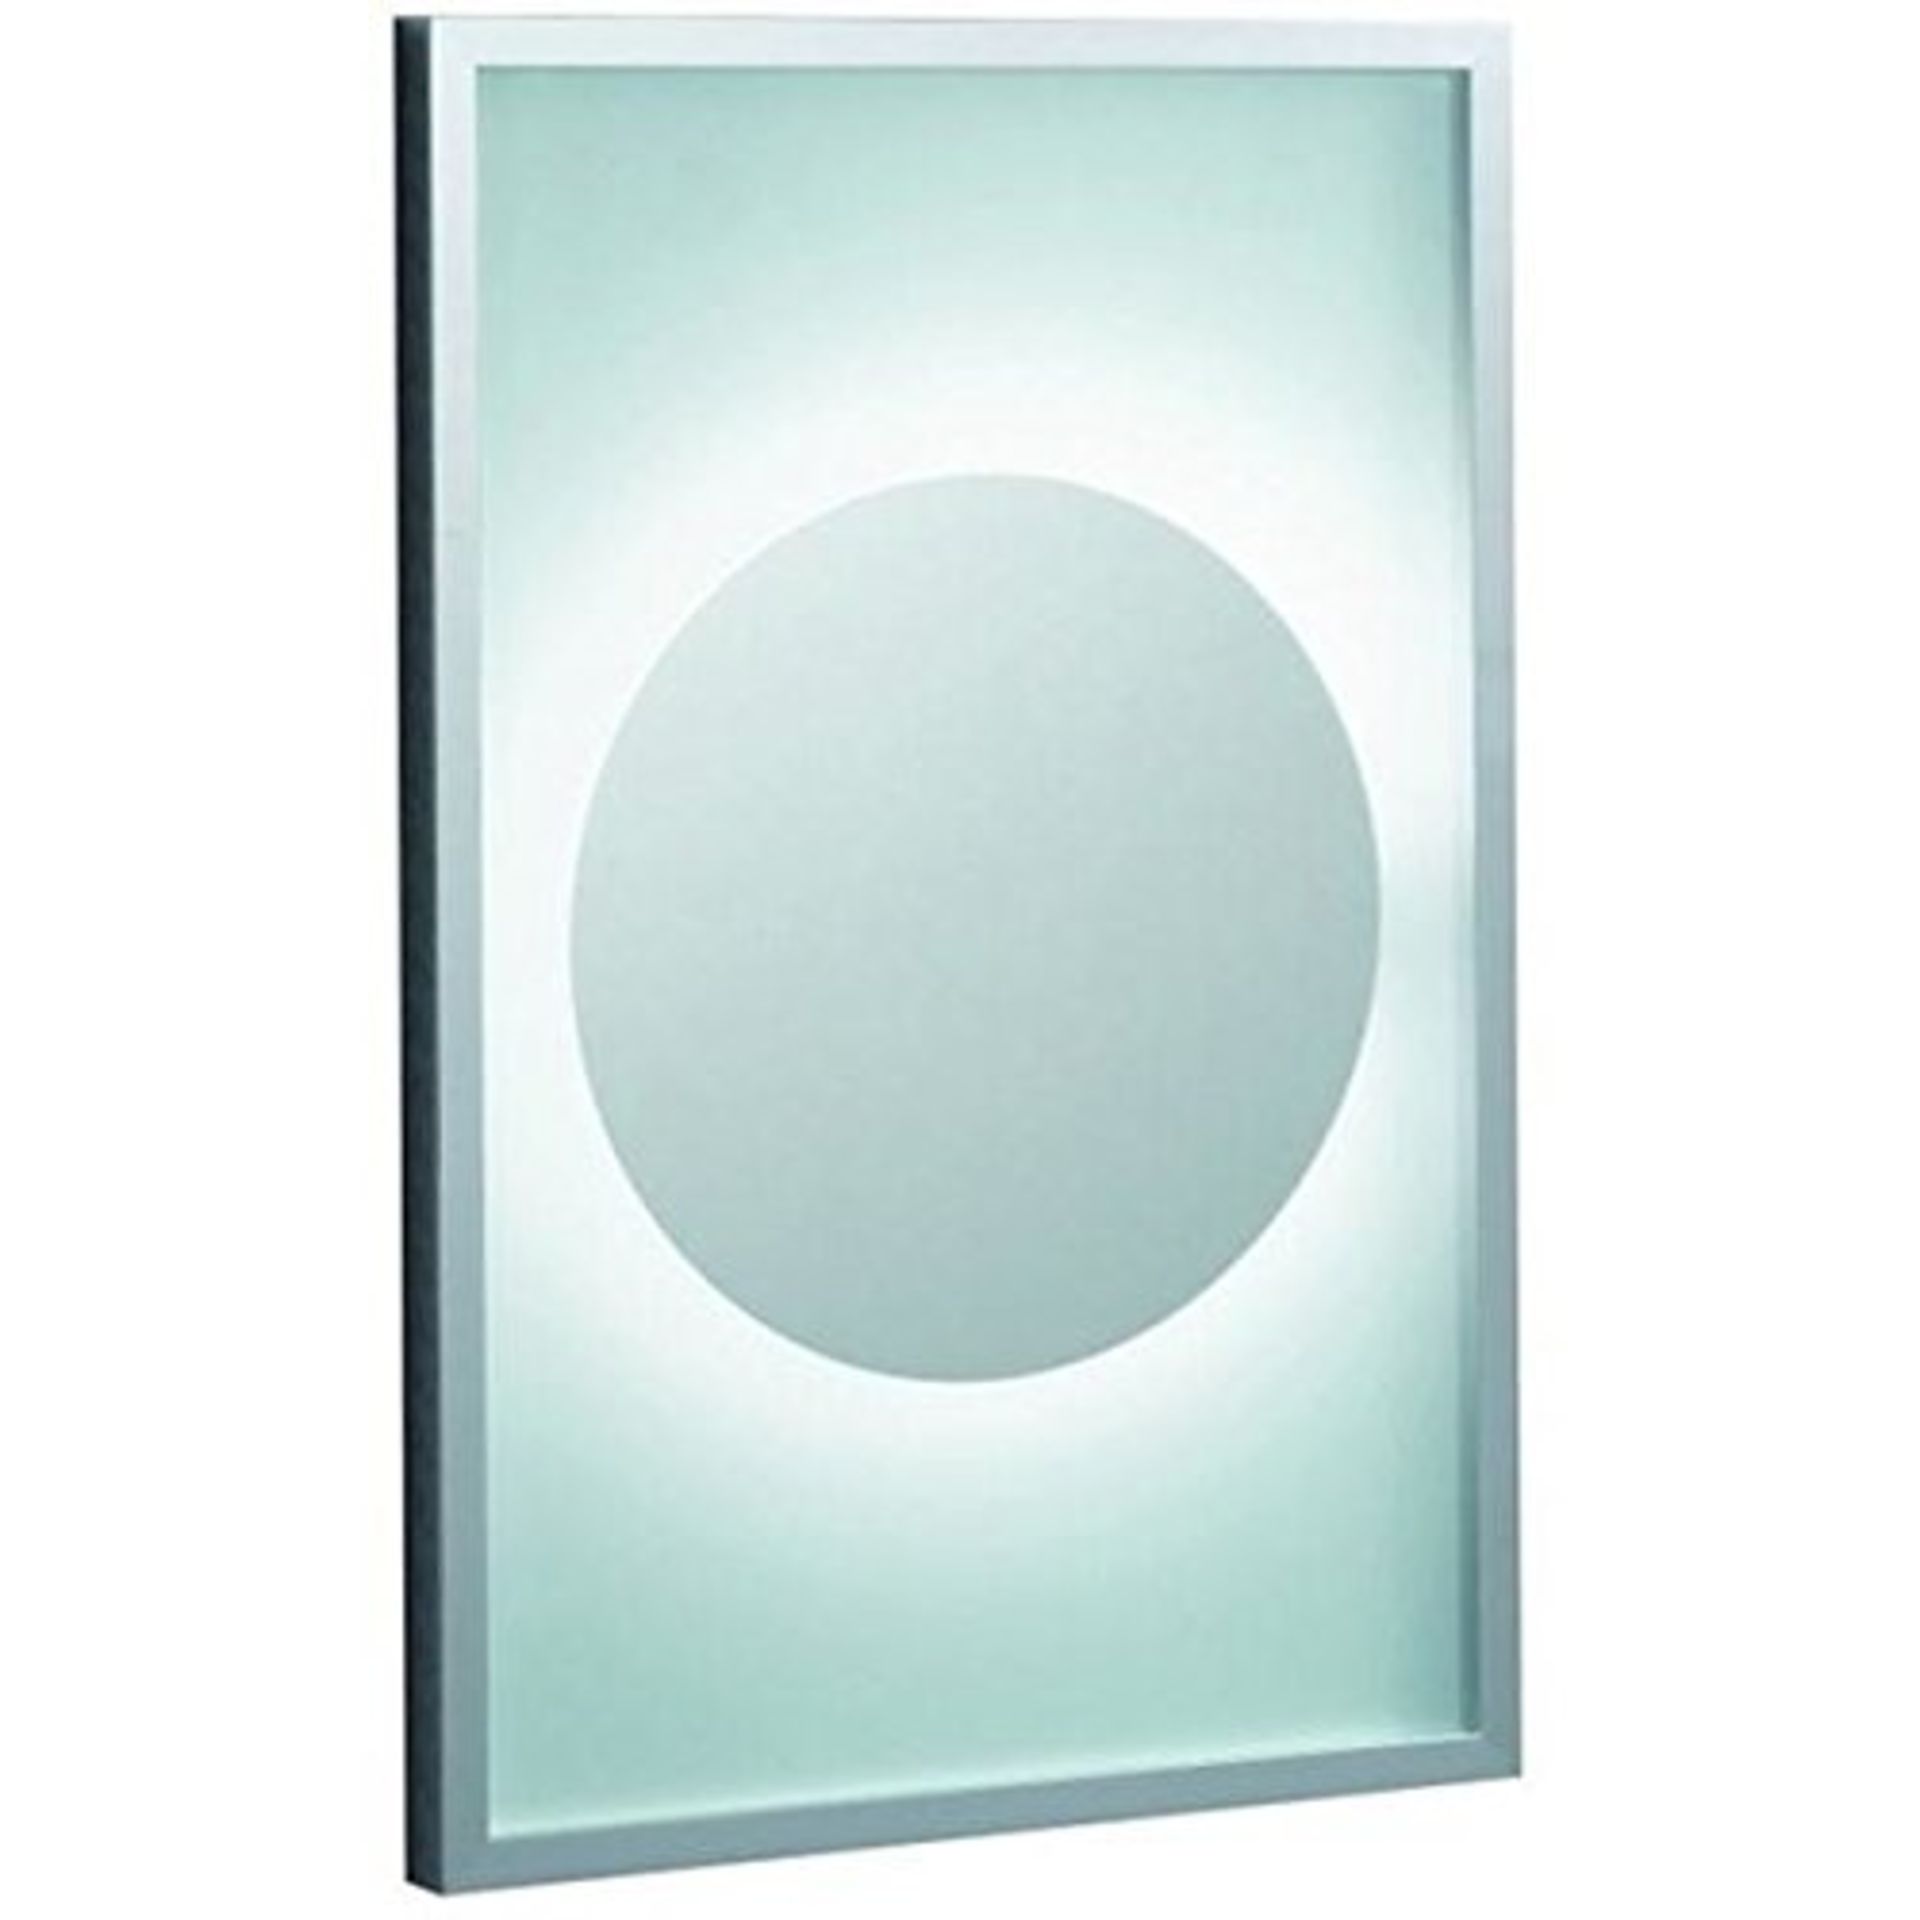 (RR32) KERAMAG 600x900mm Presciosa ll Illuminated Mirror. RRP £554.99 The aesthetics of stripp... - Image 3 of 4